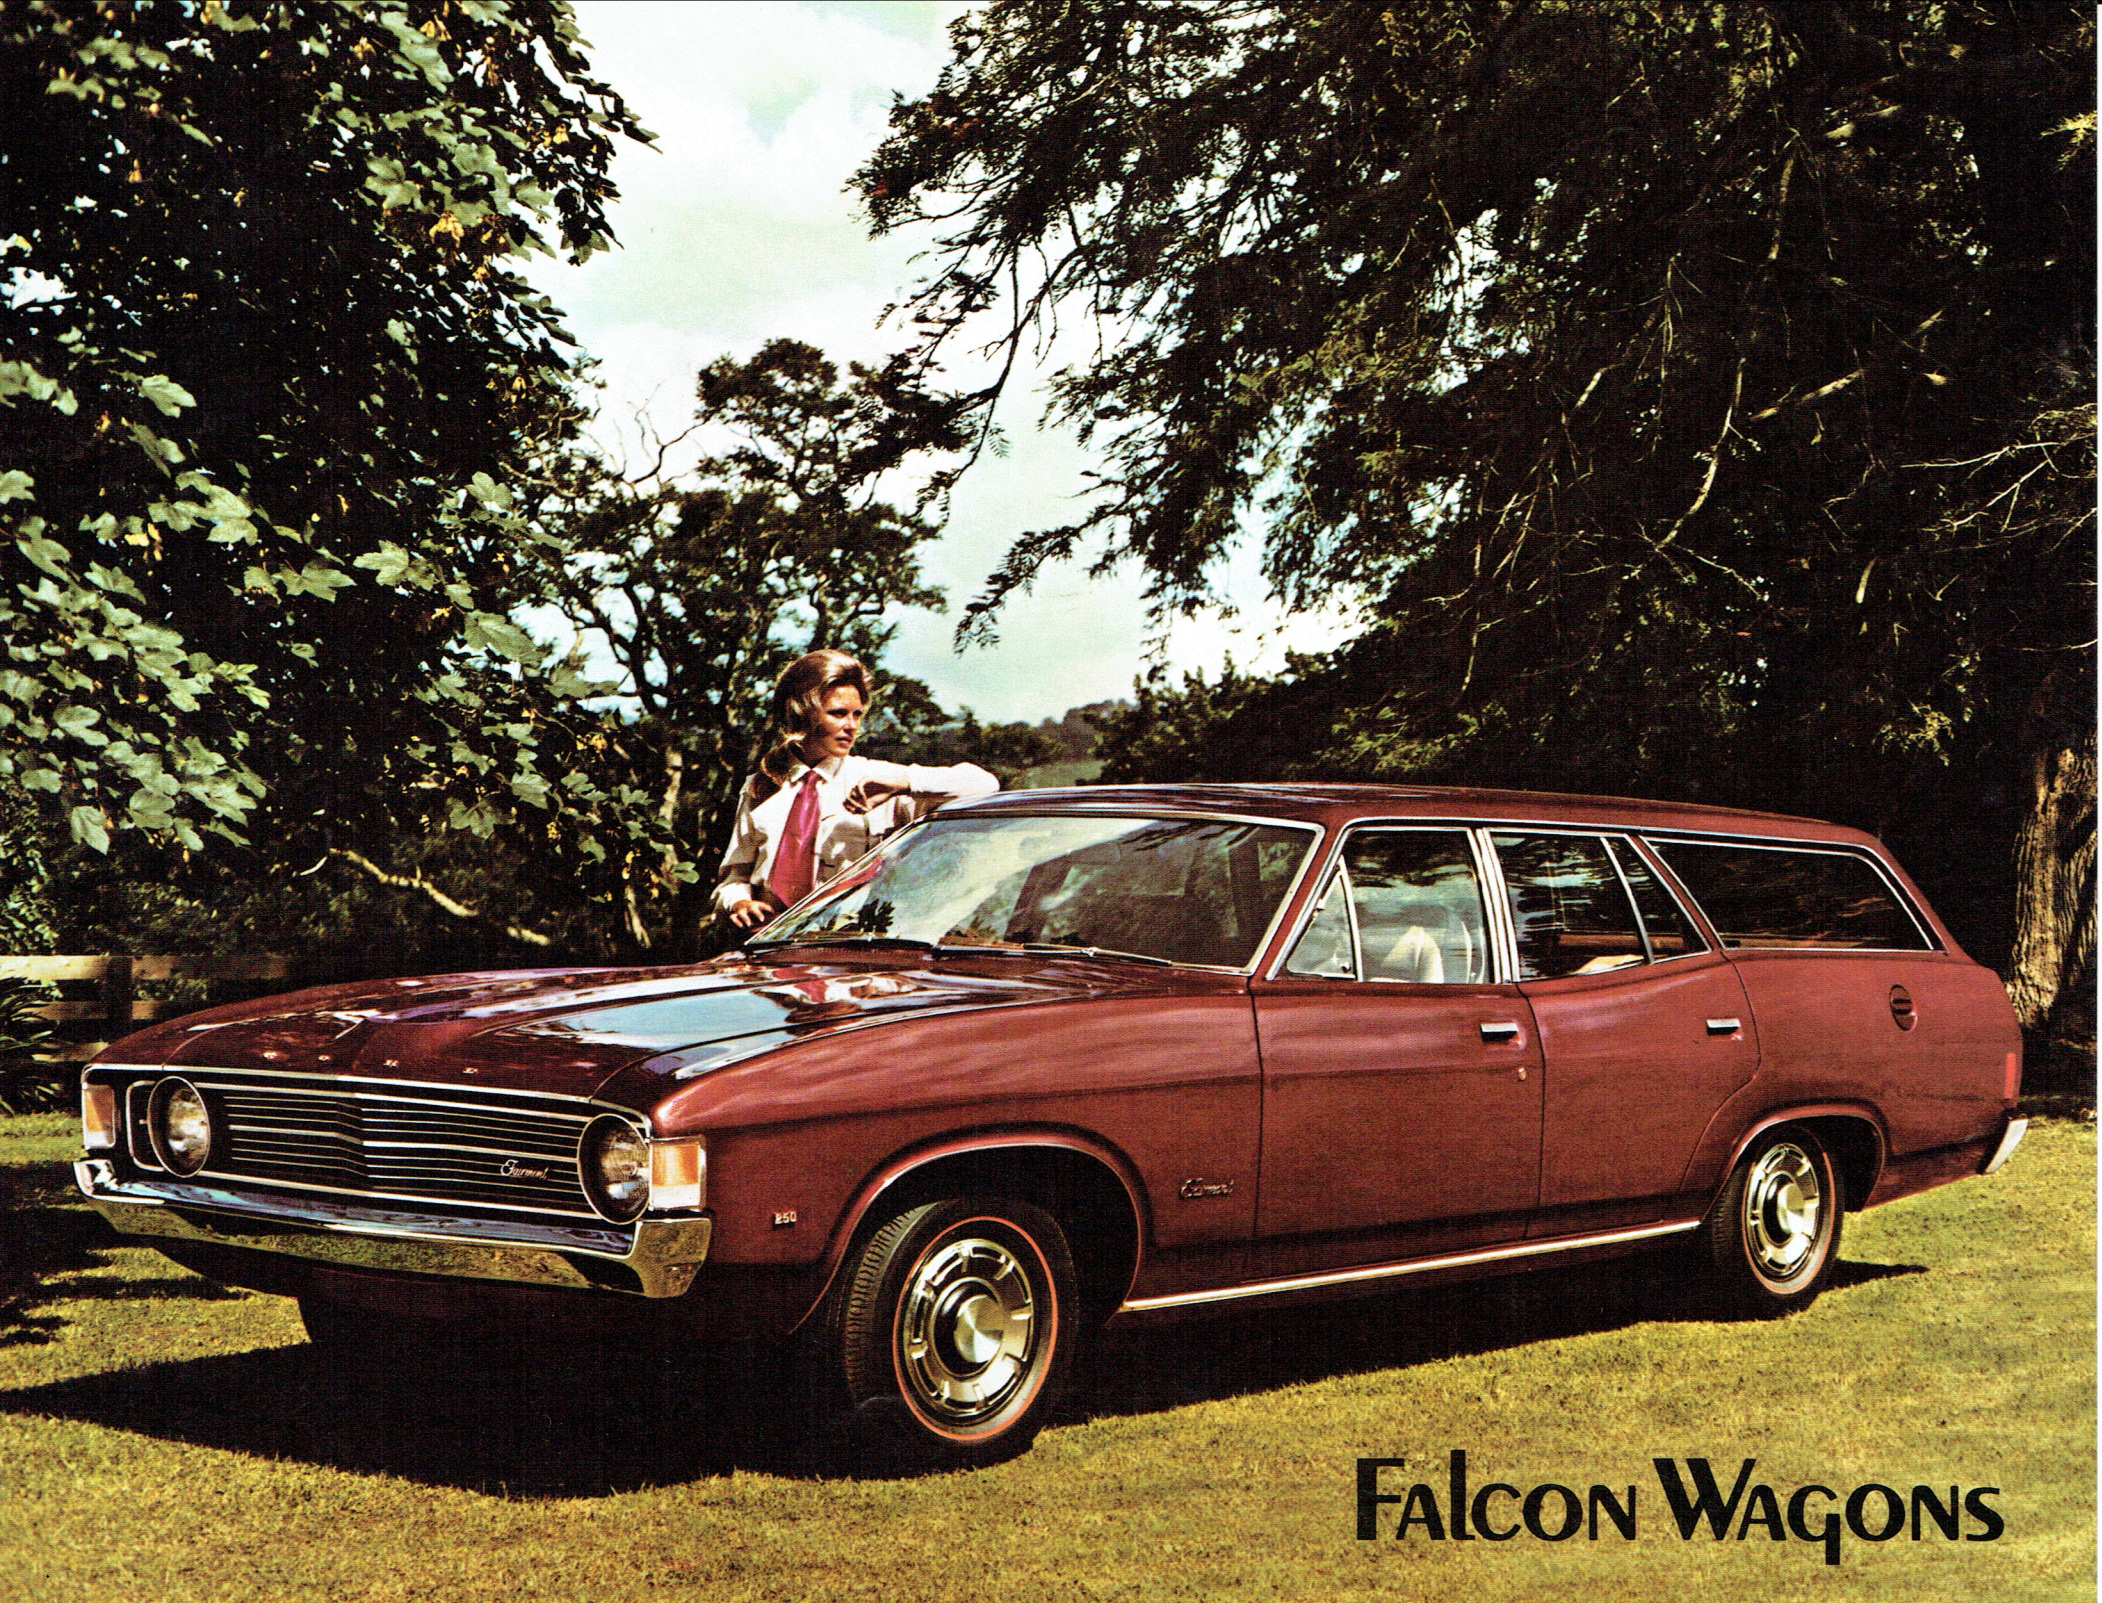 1972_Ford__XA_Falcon_Data_Sheet-07a